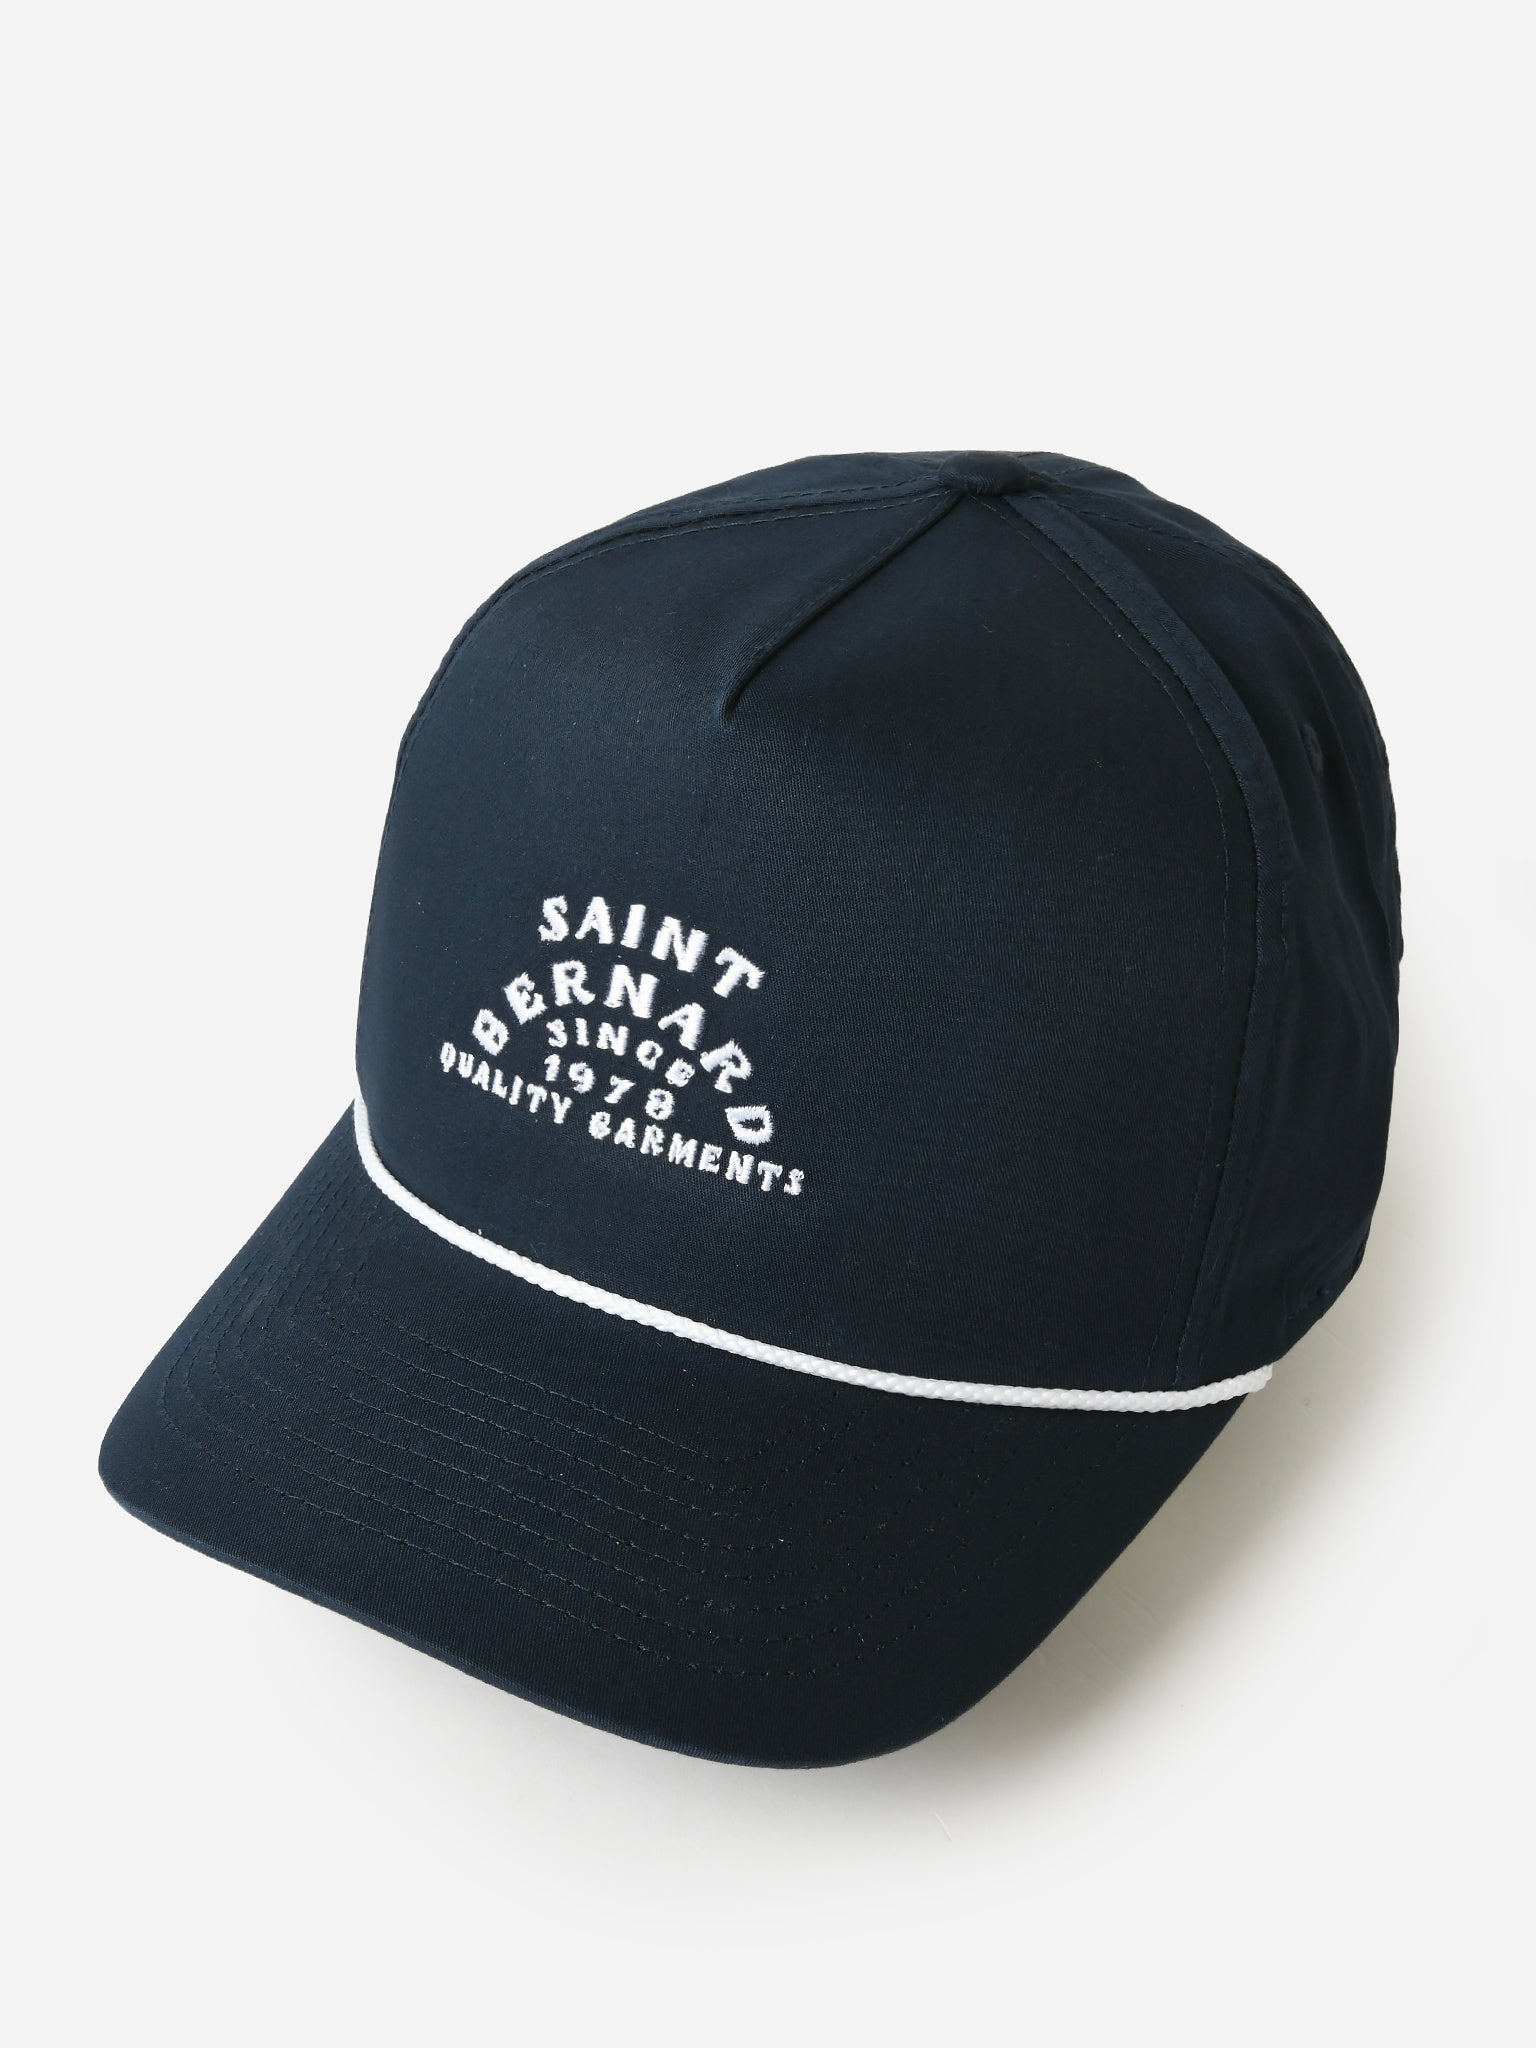 Saint Bernard Quality Garments Rope Hat – saintbernard.com